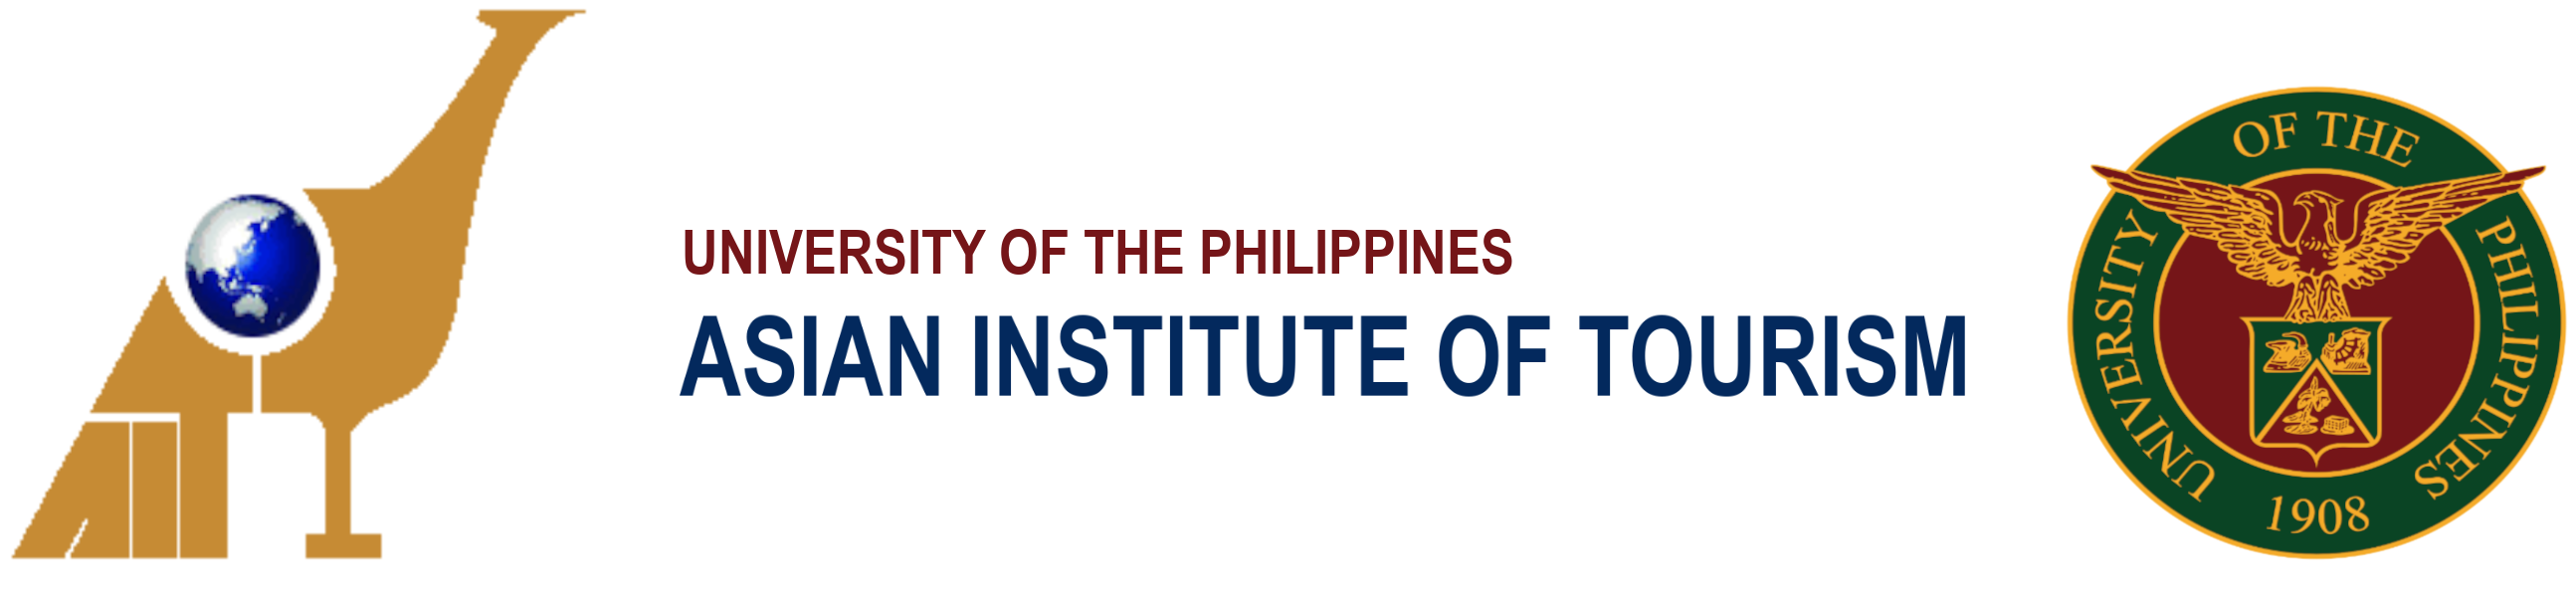 philippine tourism authority definition